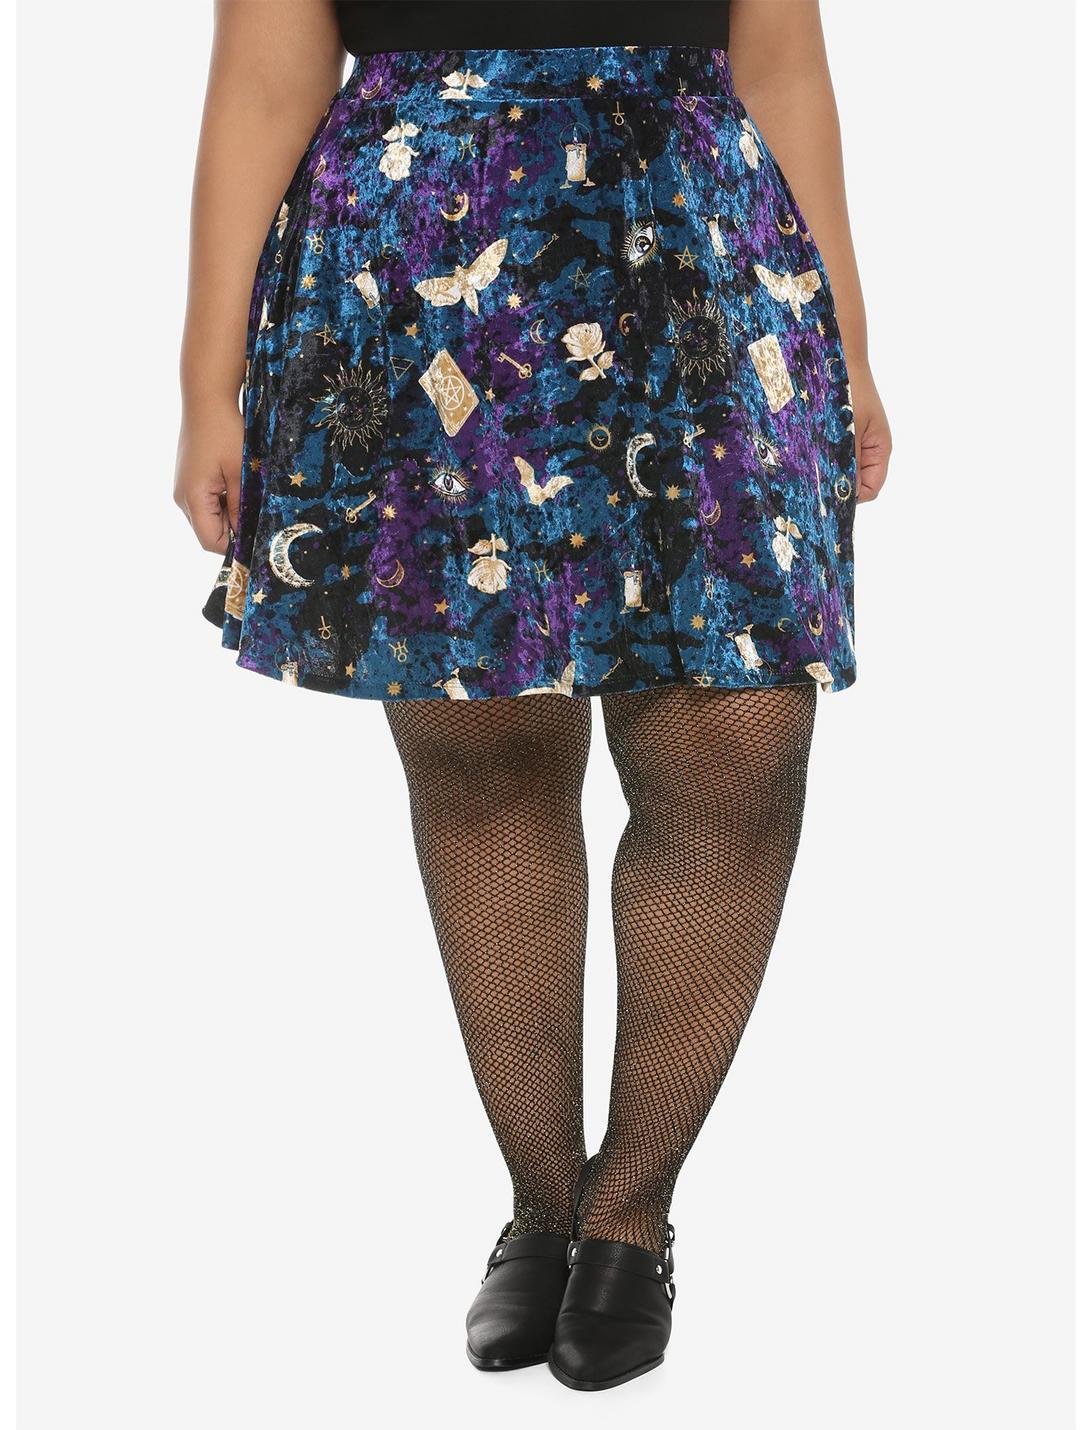 Witchy Crushed Velvet Skirt Plus Size, MULTI, hi-res